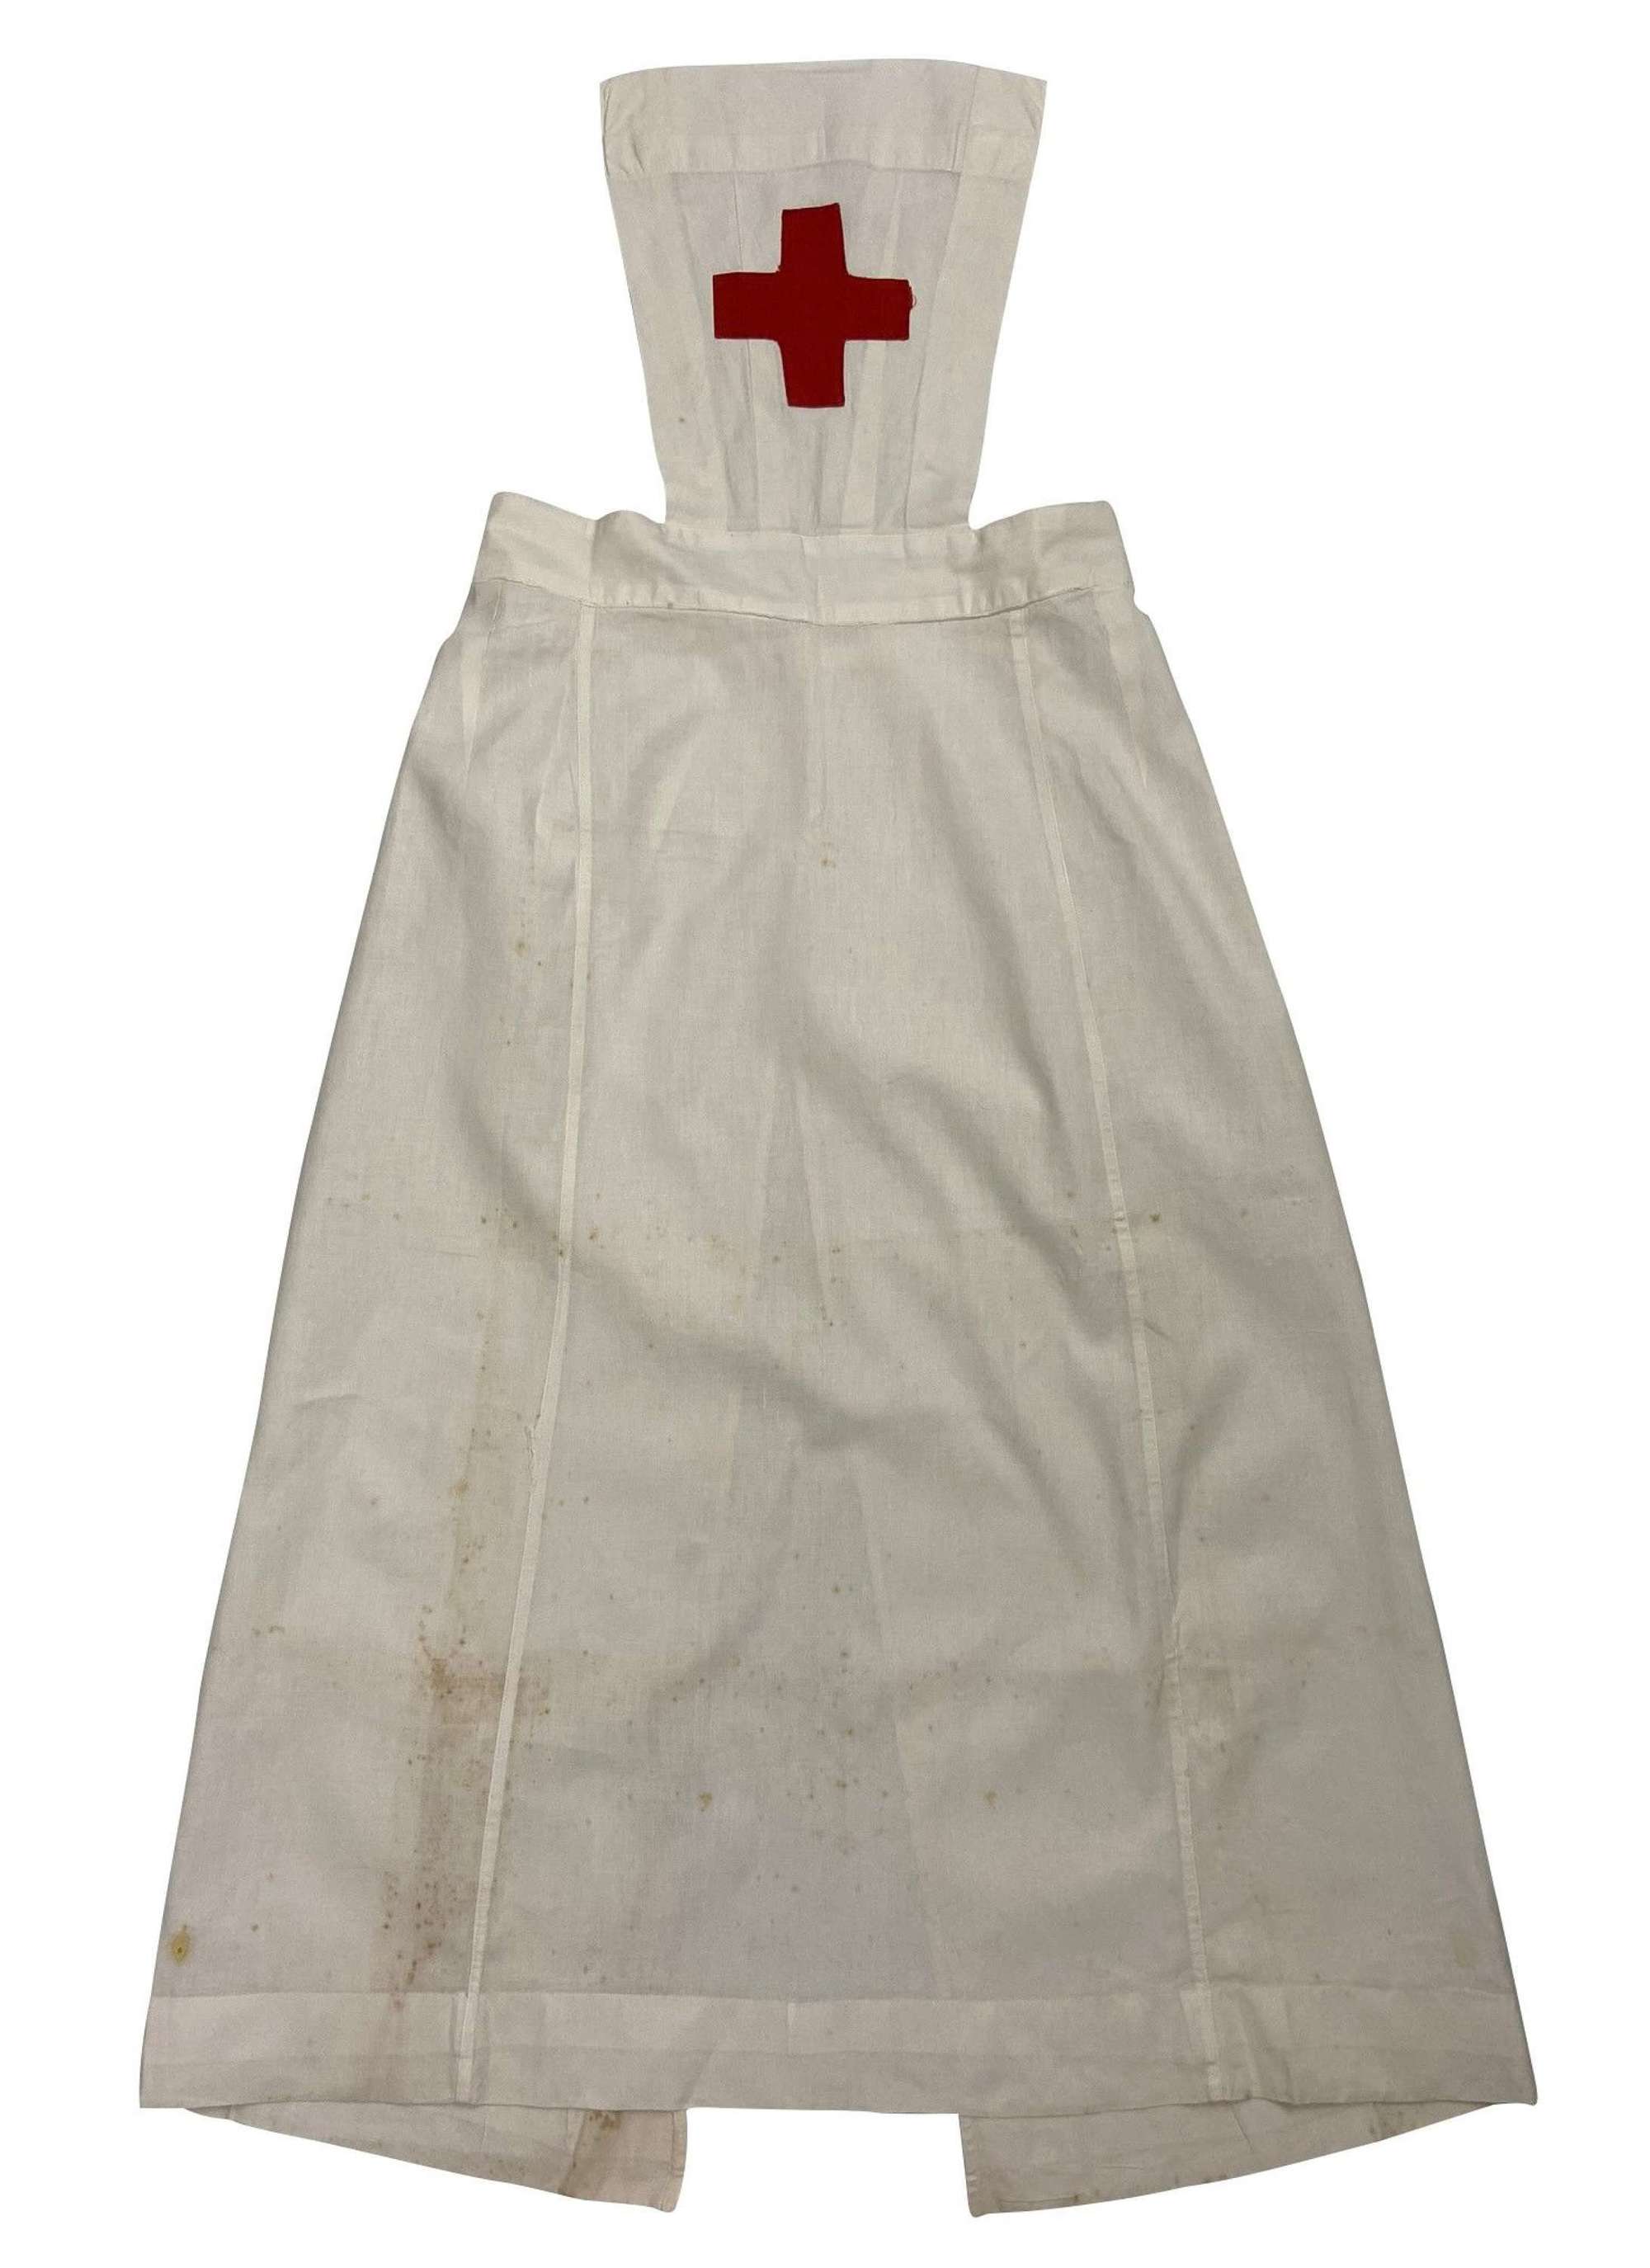 Original 1930s 1940s WW2 Period Nurses Apron